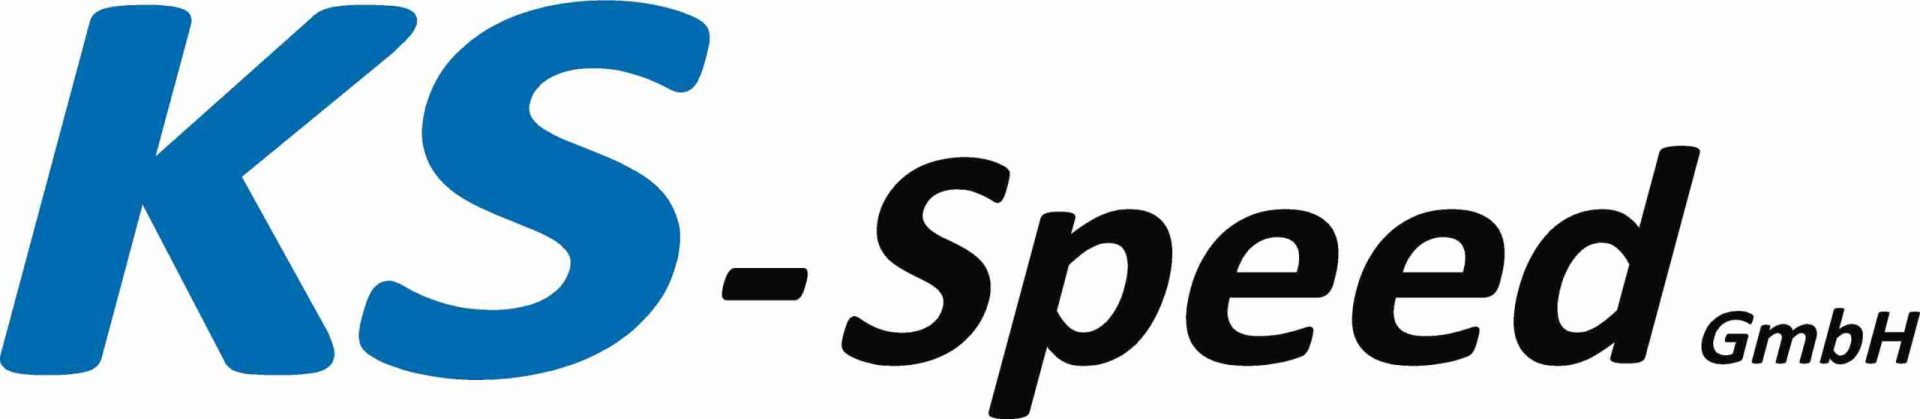 Logo Ks Speed